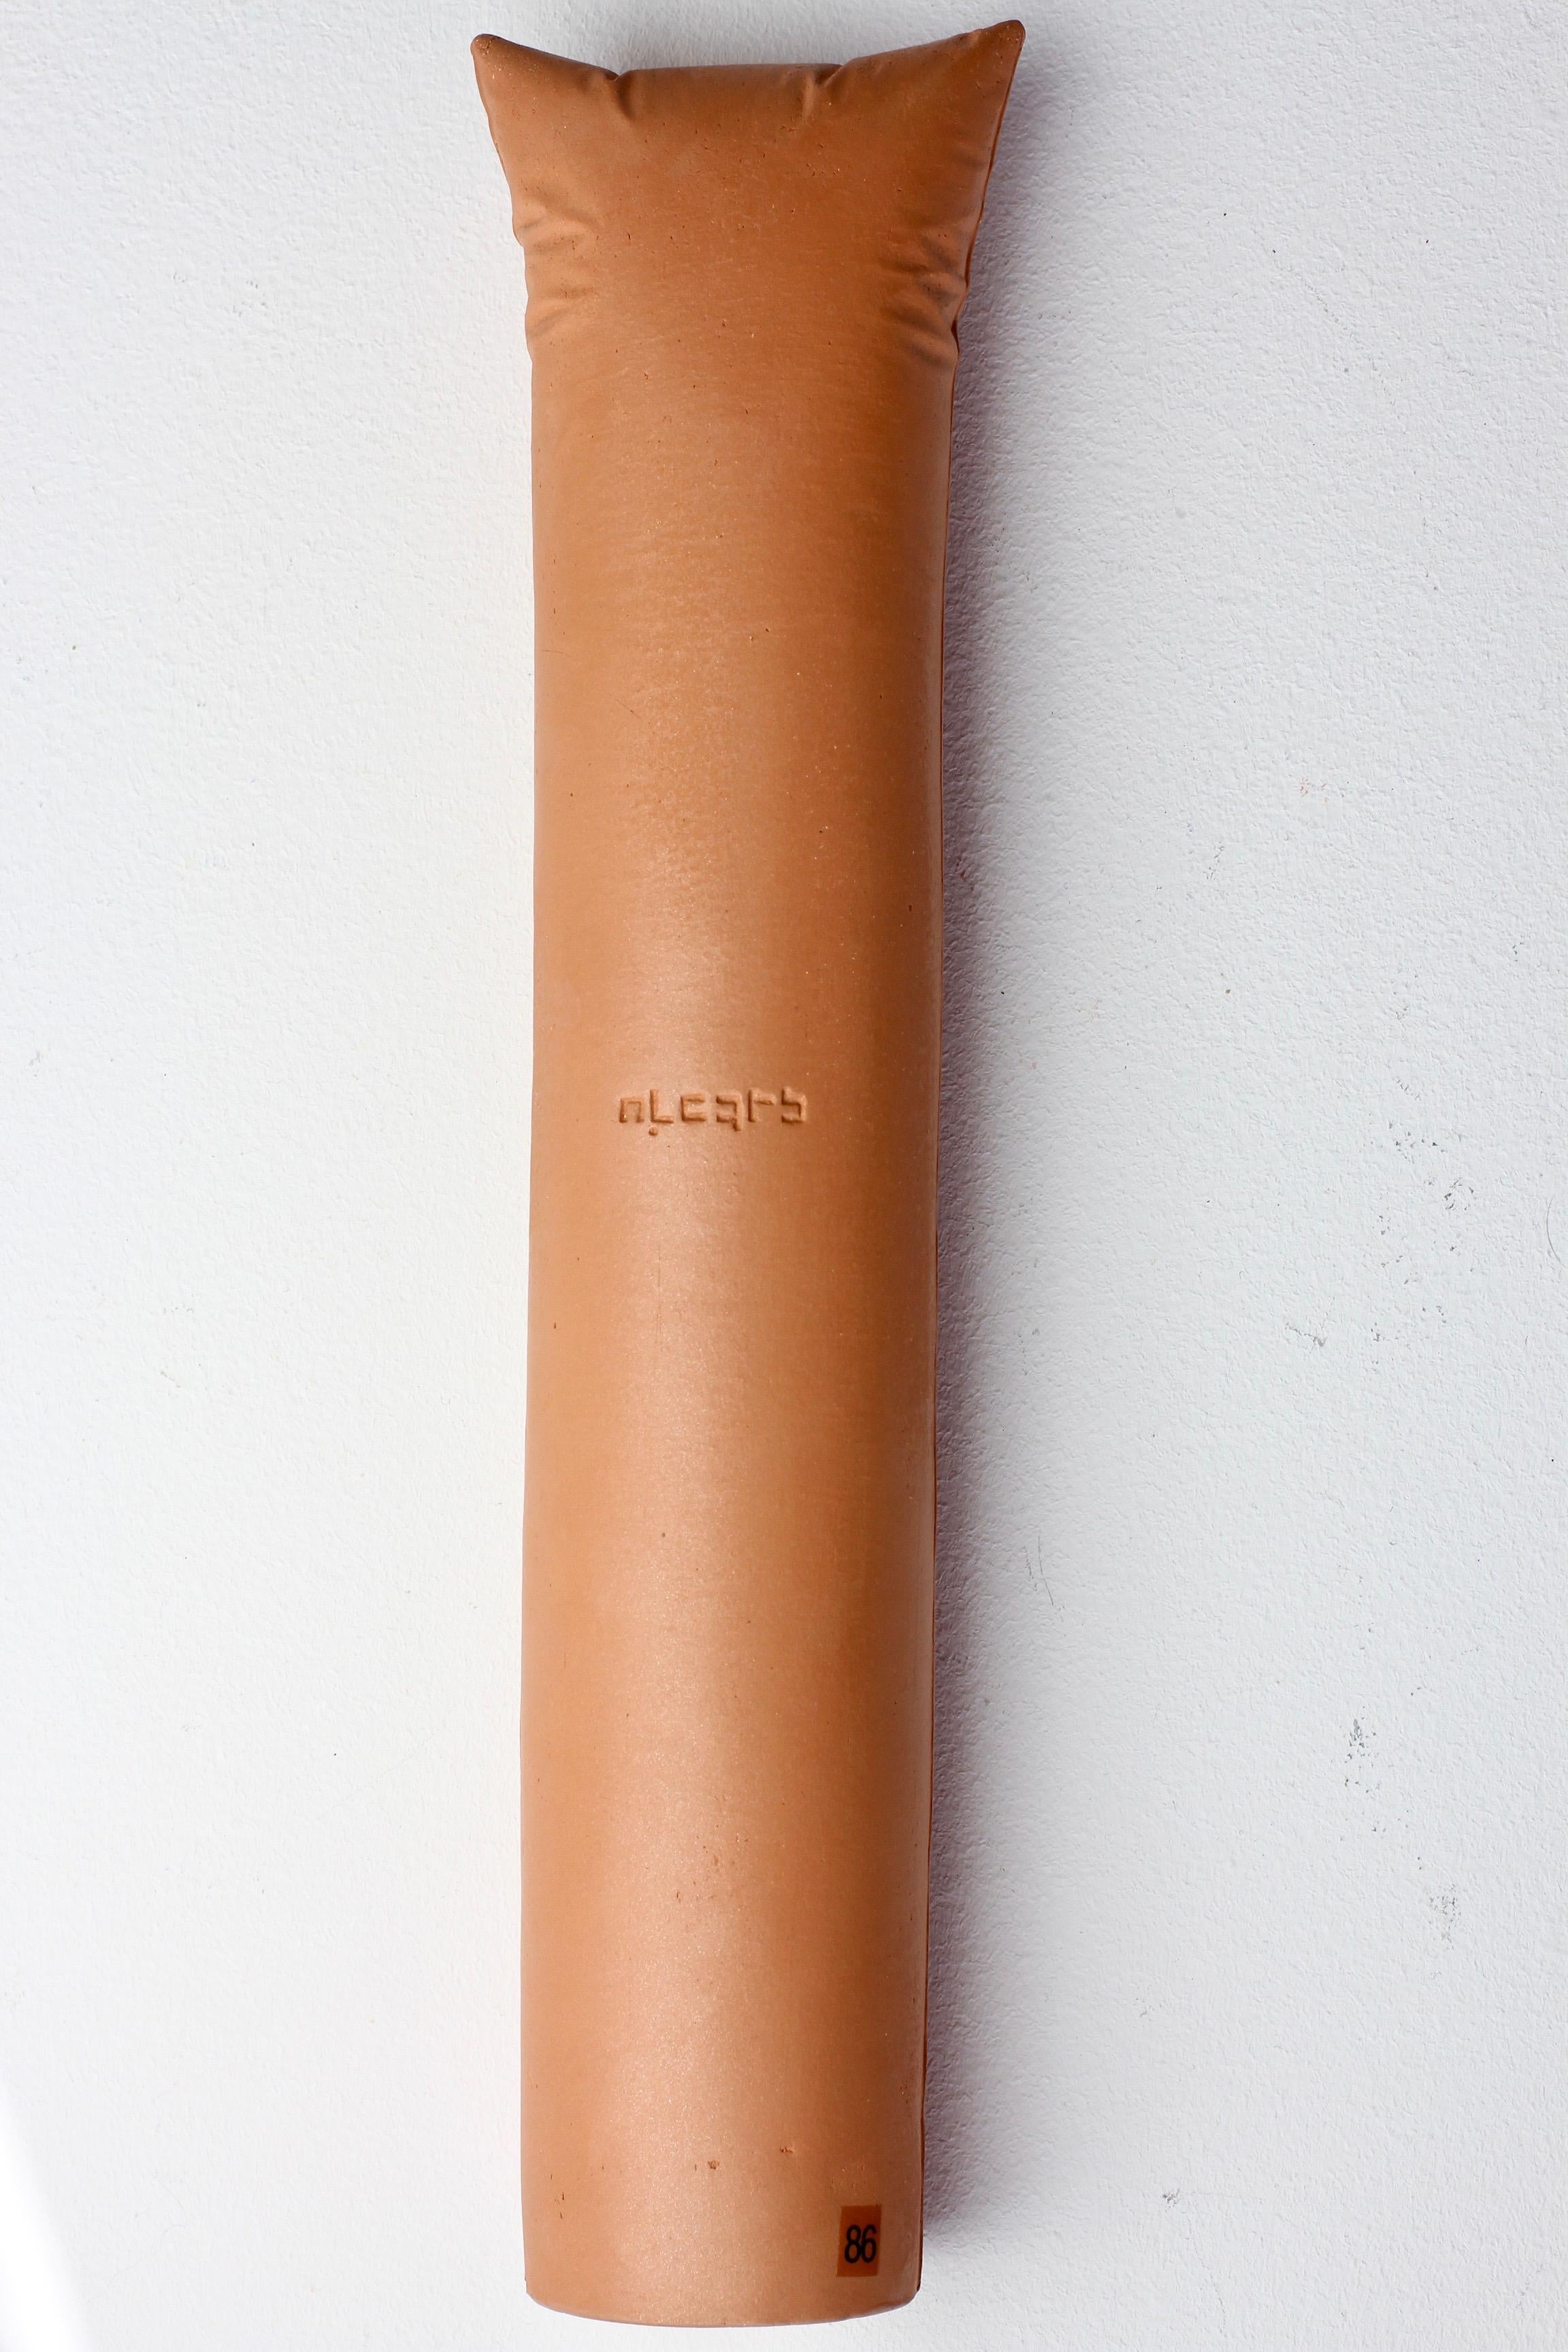 Gabriele Puetz Pillow Pillar 'Nichts' Vintage German Art Pottery Sculpture # 5/7 For Sale 4